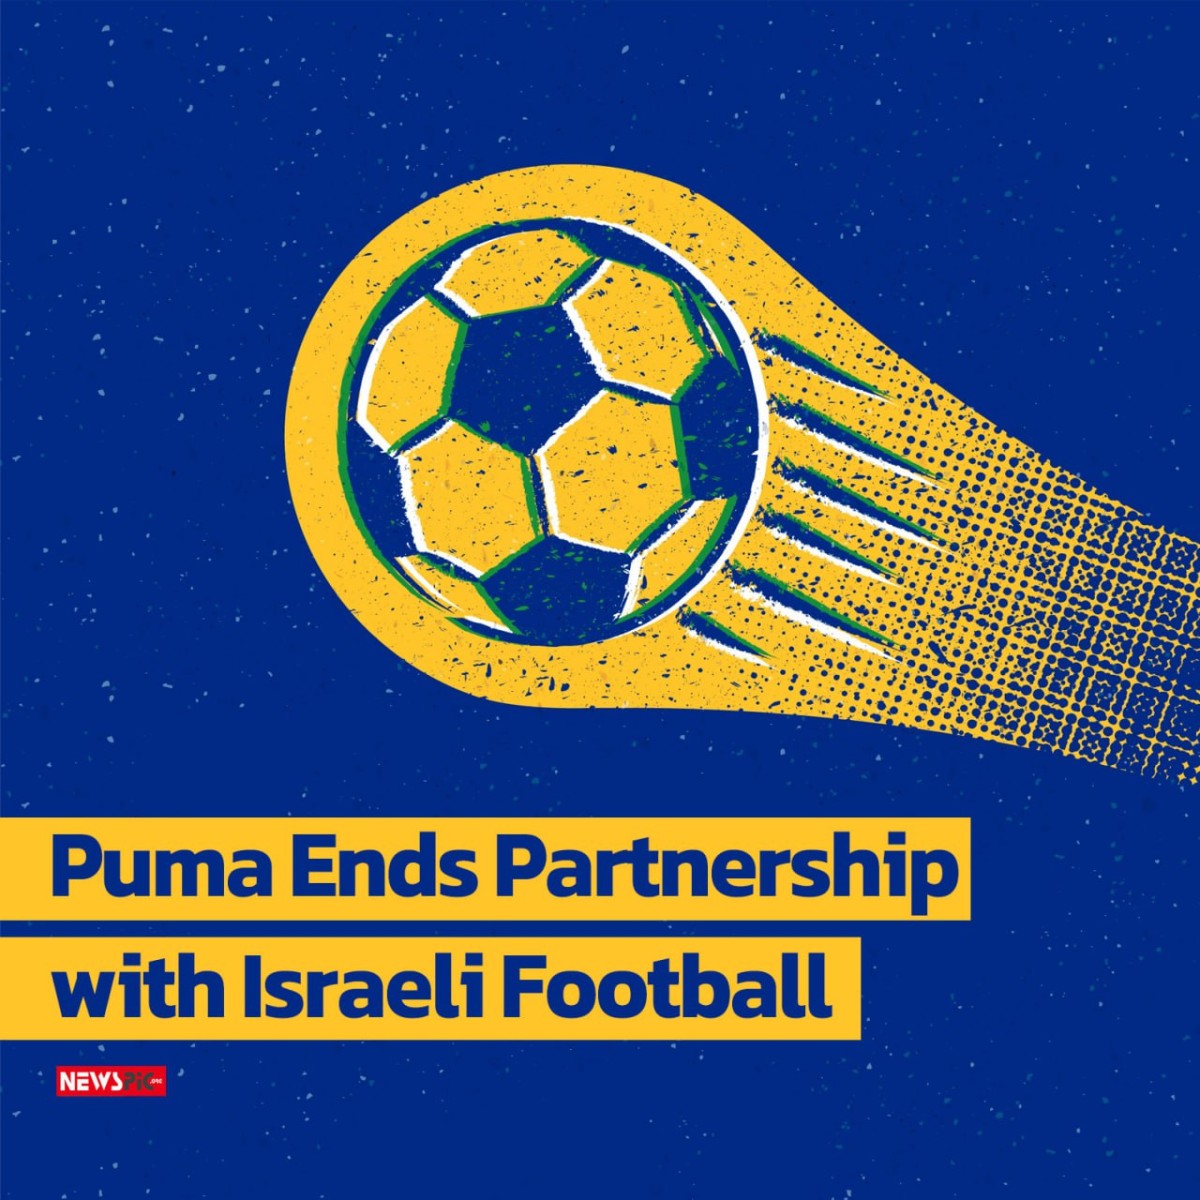 Puma Ends Partnership with Israeli Football